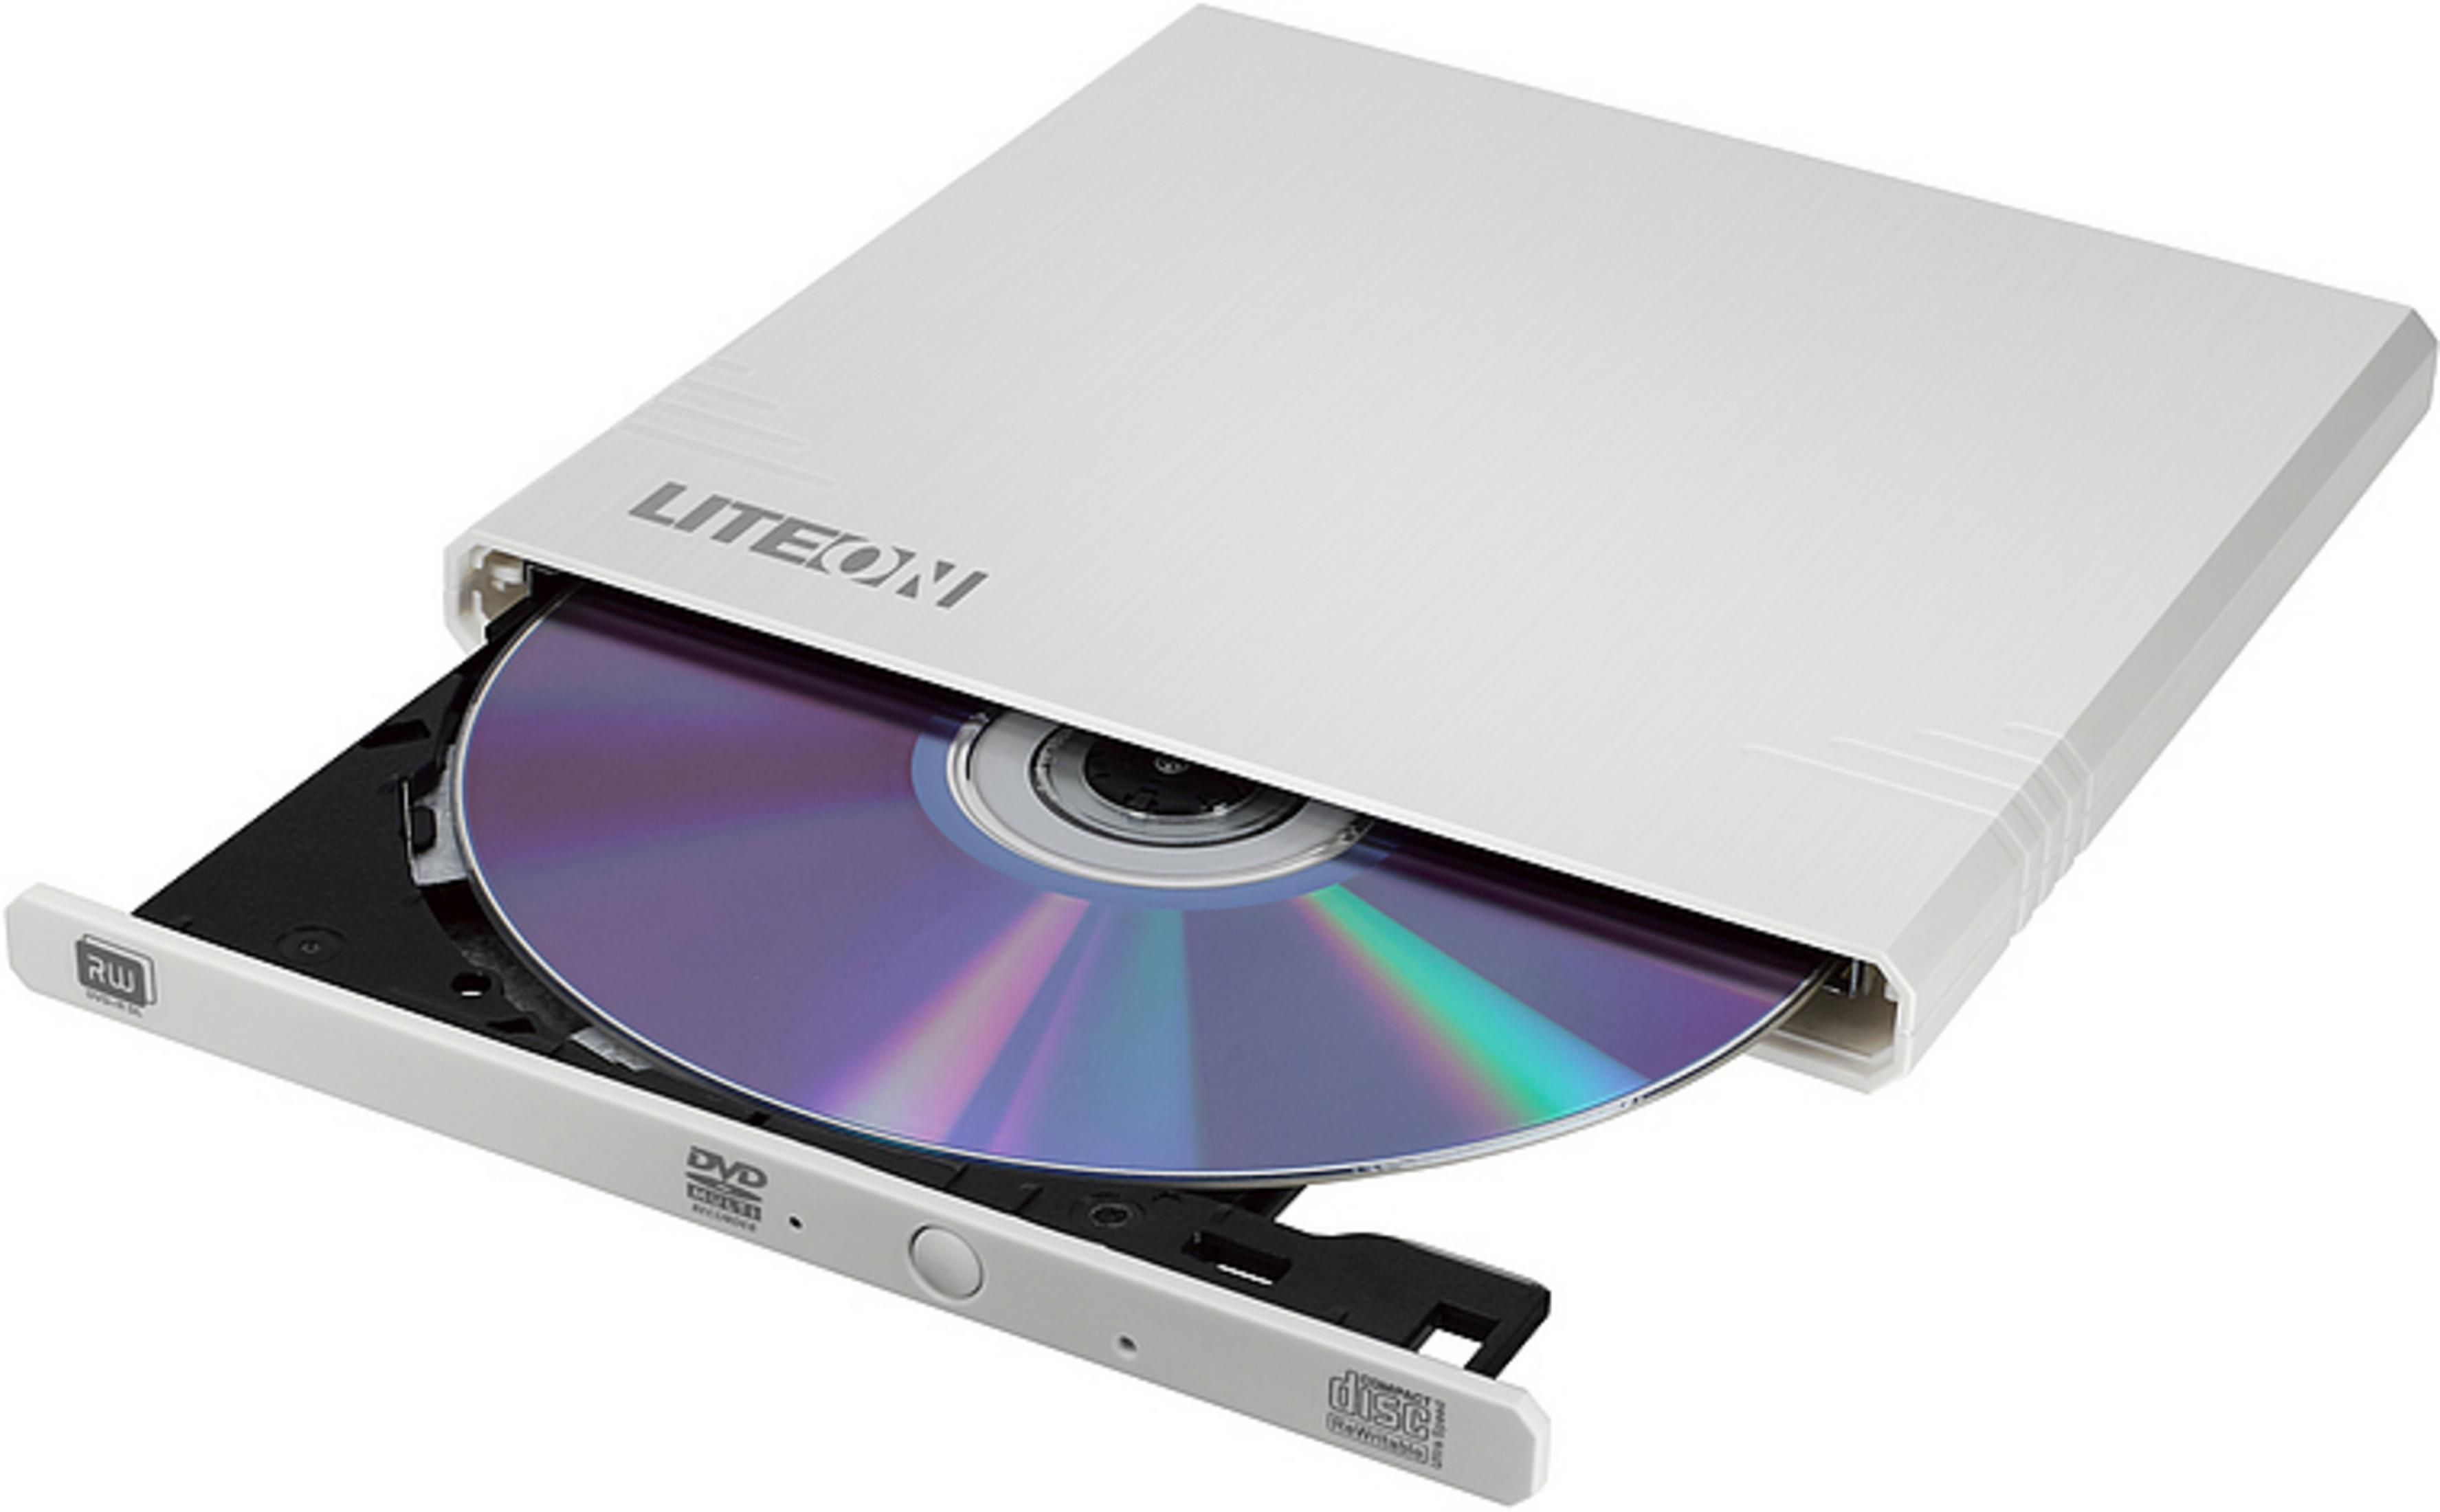 LITE-ON EXTERNAL SLIM Brenner CD/DVD extern 8X USB WHITE DVD-RW